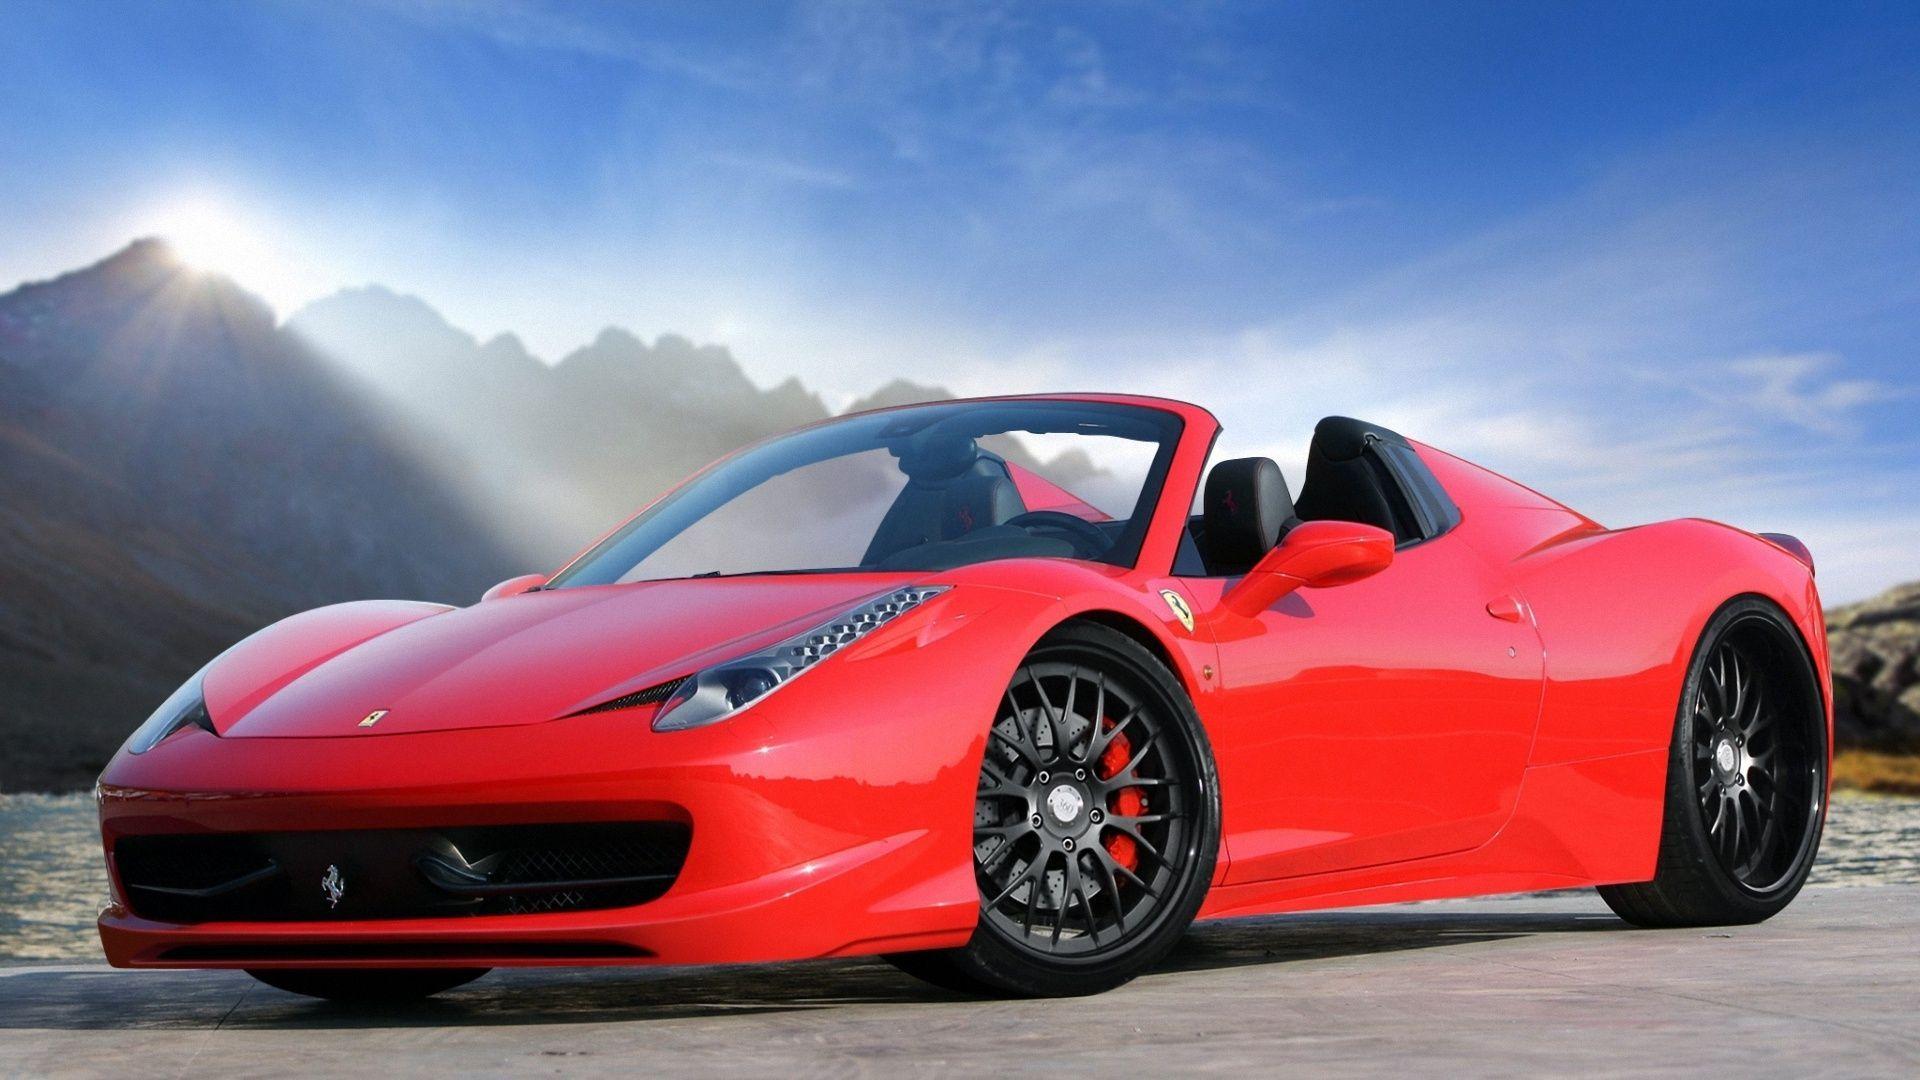 Ferrari HD 1080p wallpaper download free red ferrari 1080p new cars